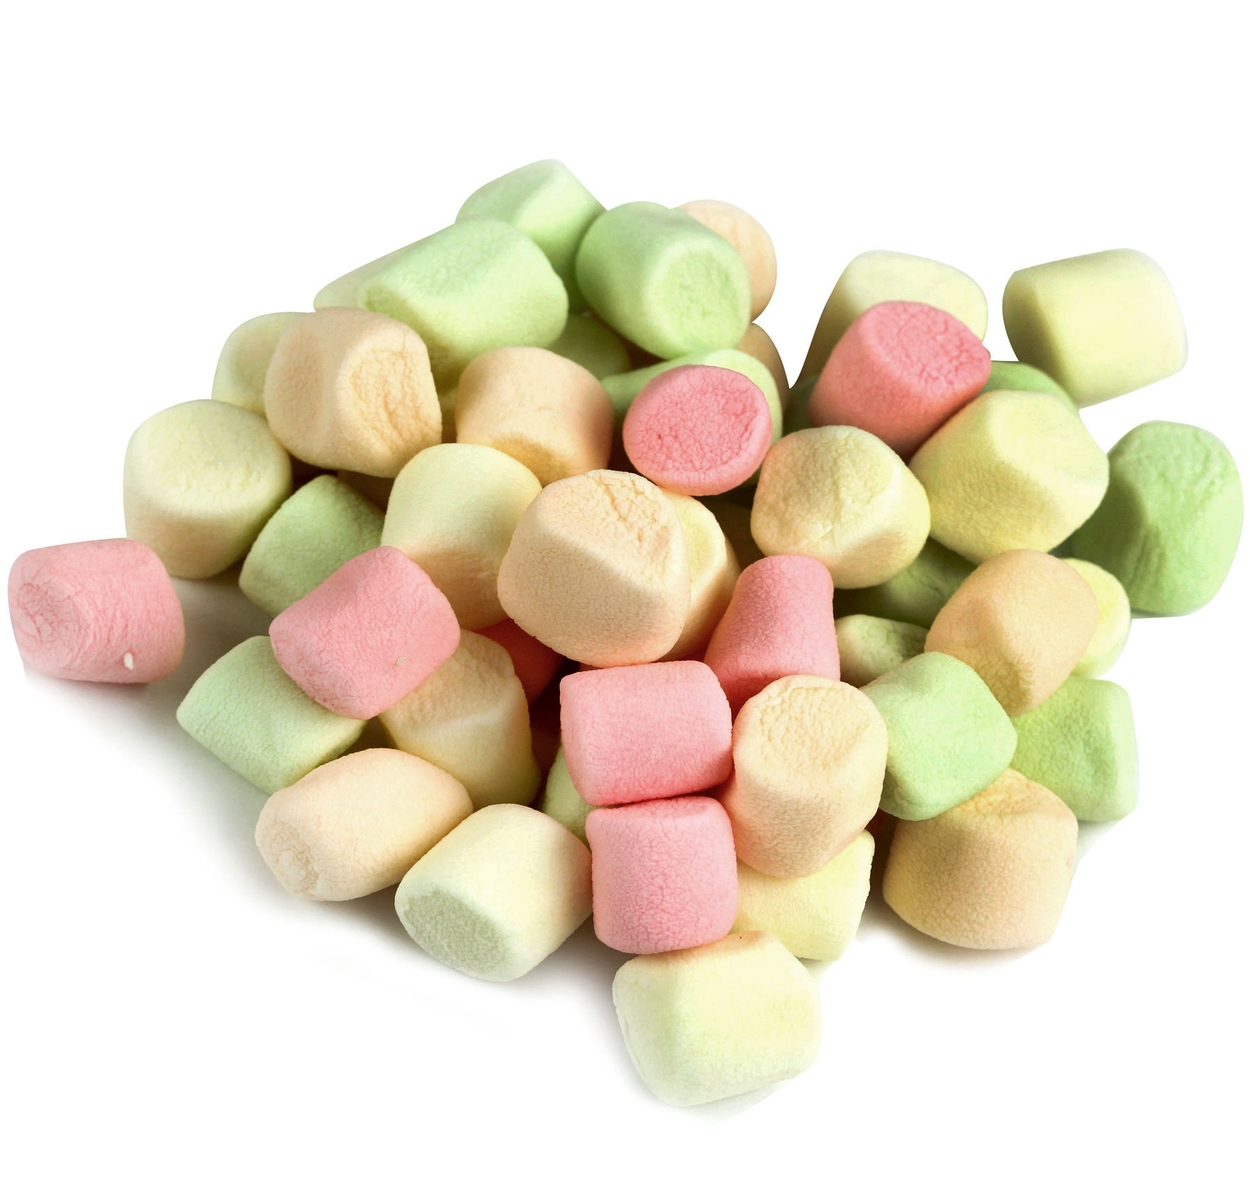 Candy Mini Marshmallows 6oz Bulk